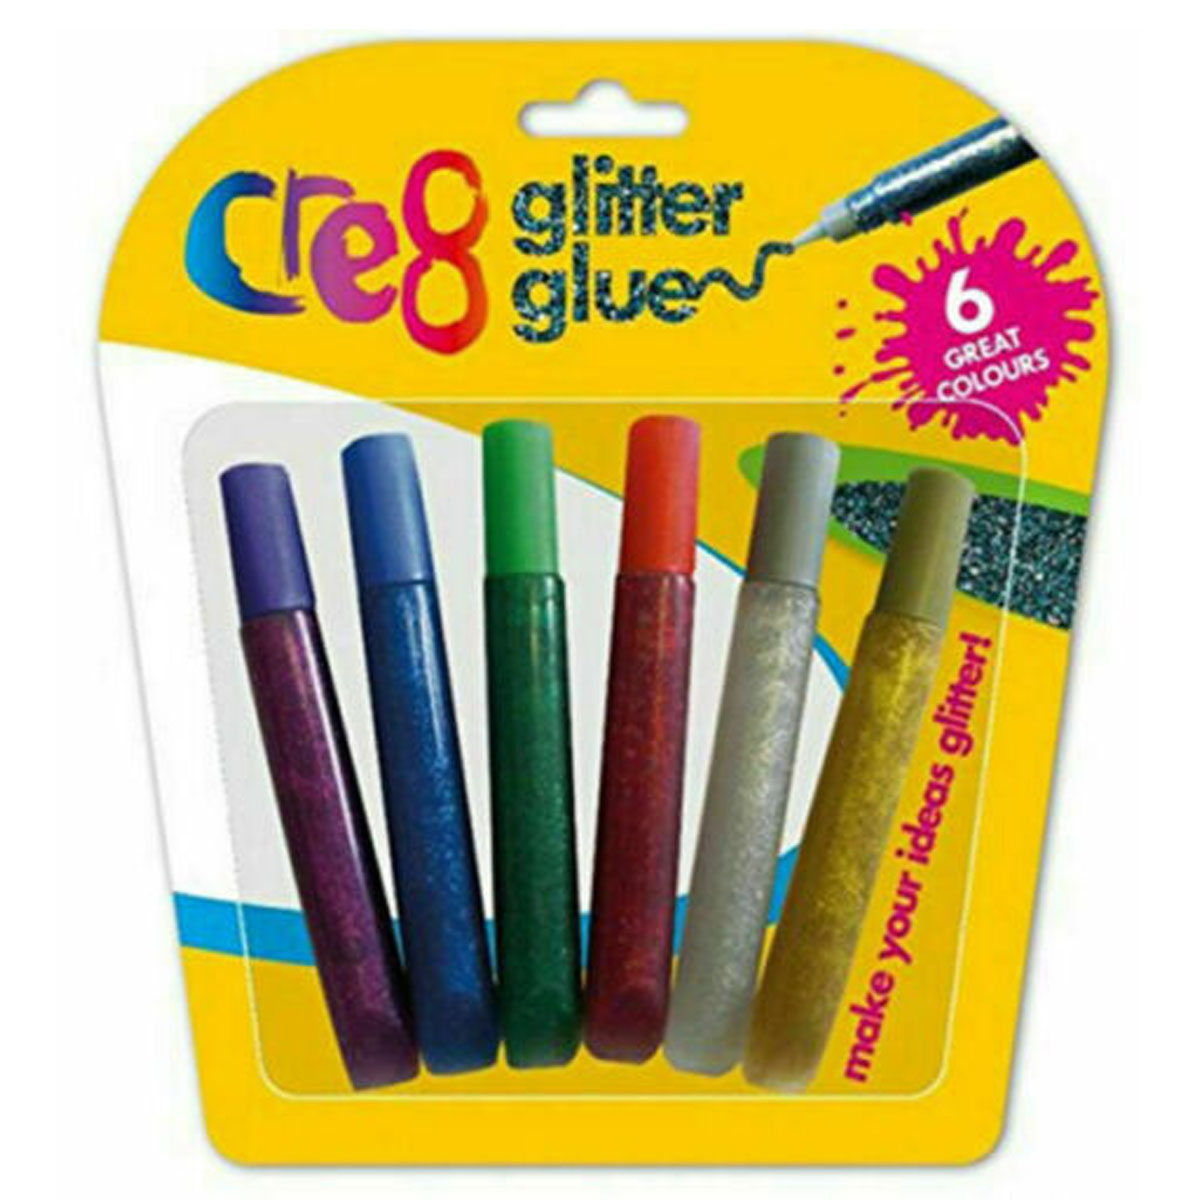 Cre8 - Glitter Glue Pens - x6 - Continental Food Store